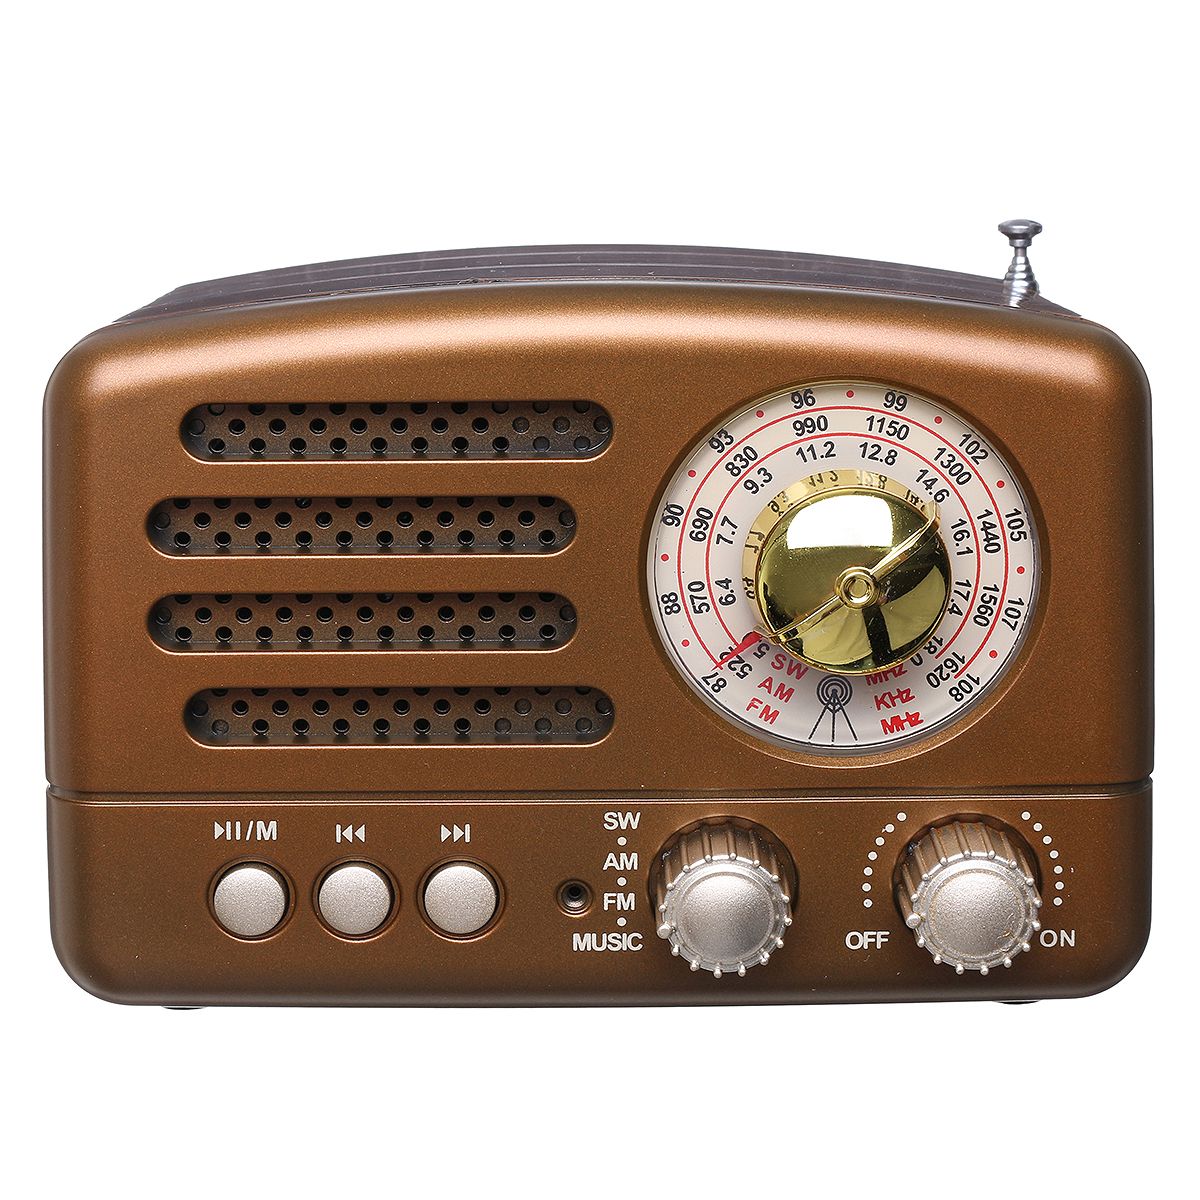 Portable-Retro-Radio-AM-FM-SW-bluetooth-Speaker-TF-Card-Slot-Rechargeable-1636160